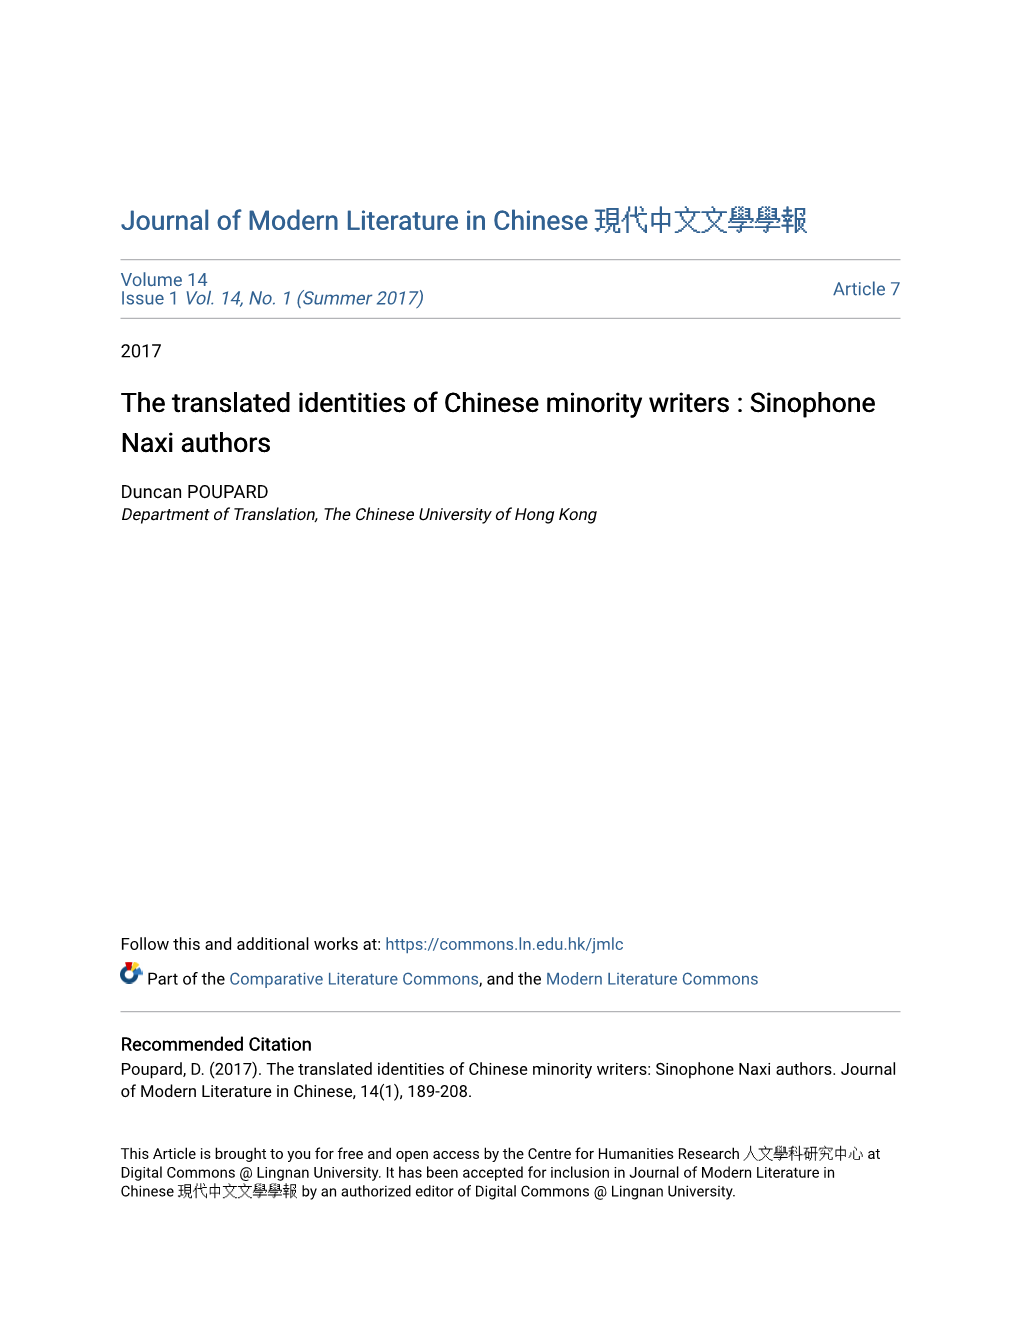 The Translated Identities of Chinese Minority Writers : Sinophone Naxi Authors